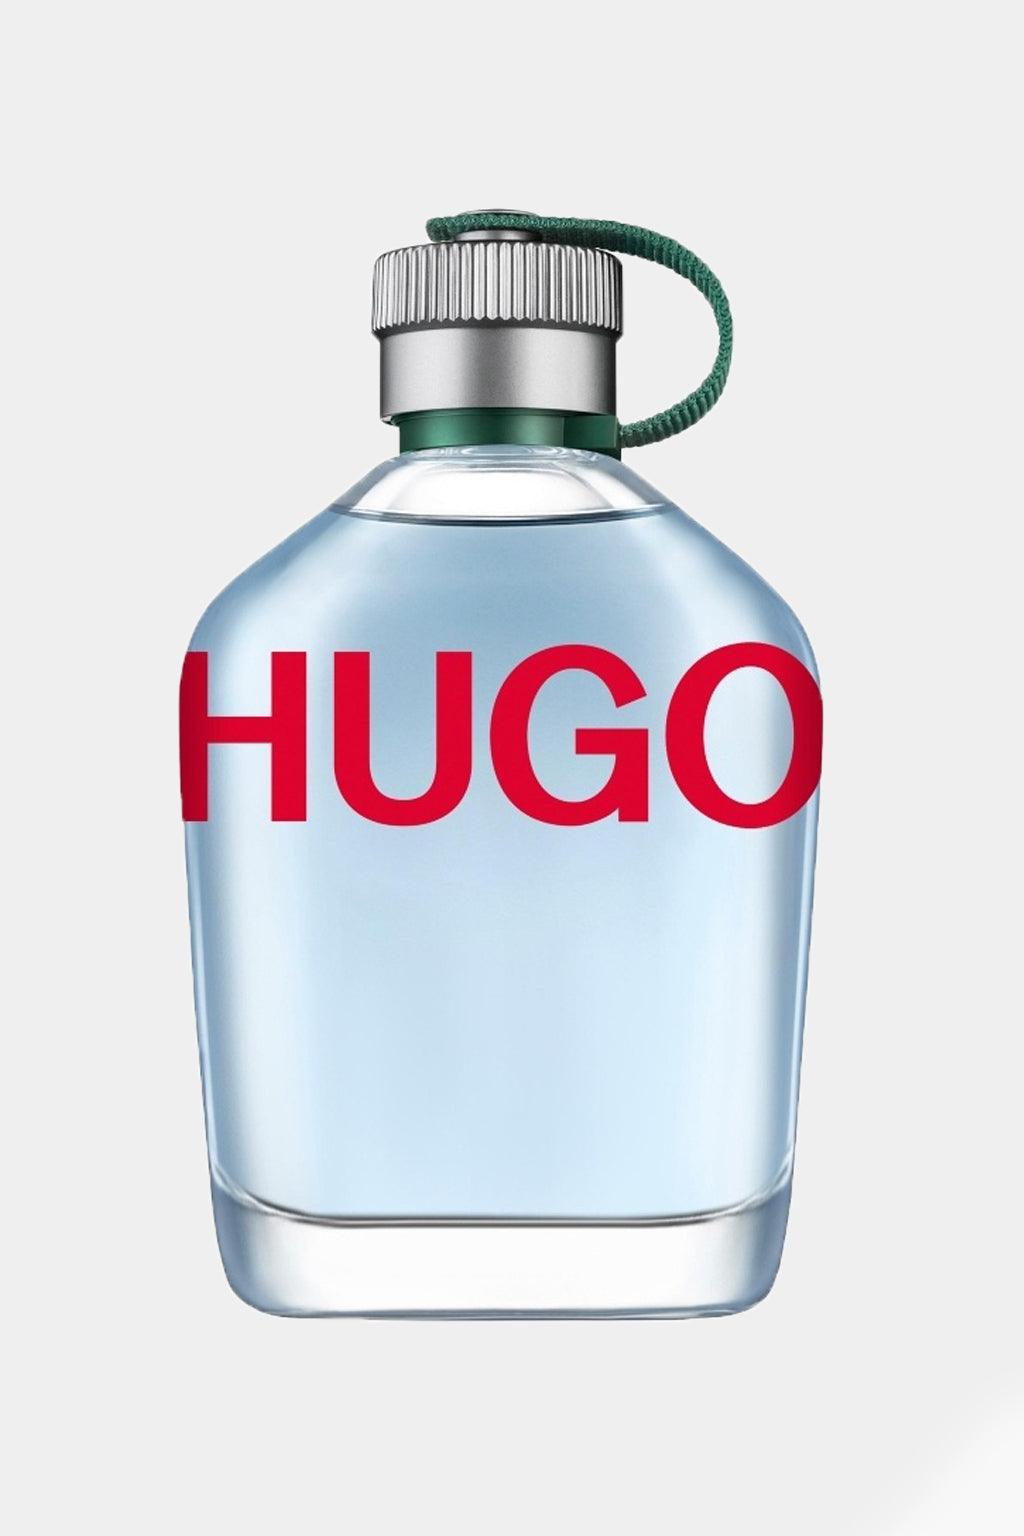 Hugo Boss - Hugo Man Eau De Toilette 200ml